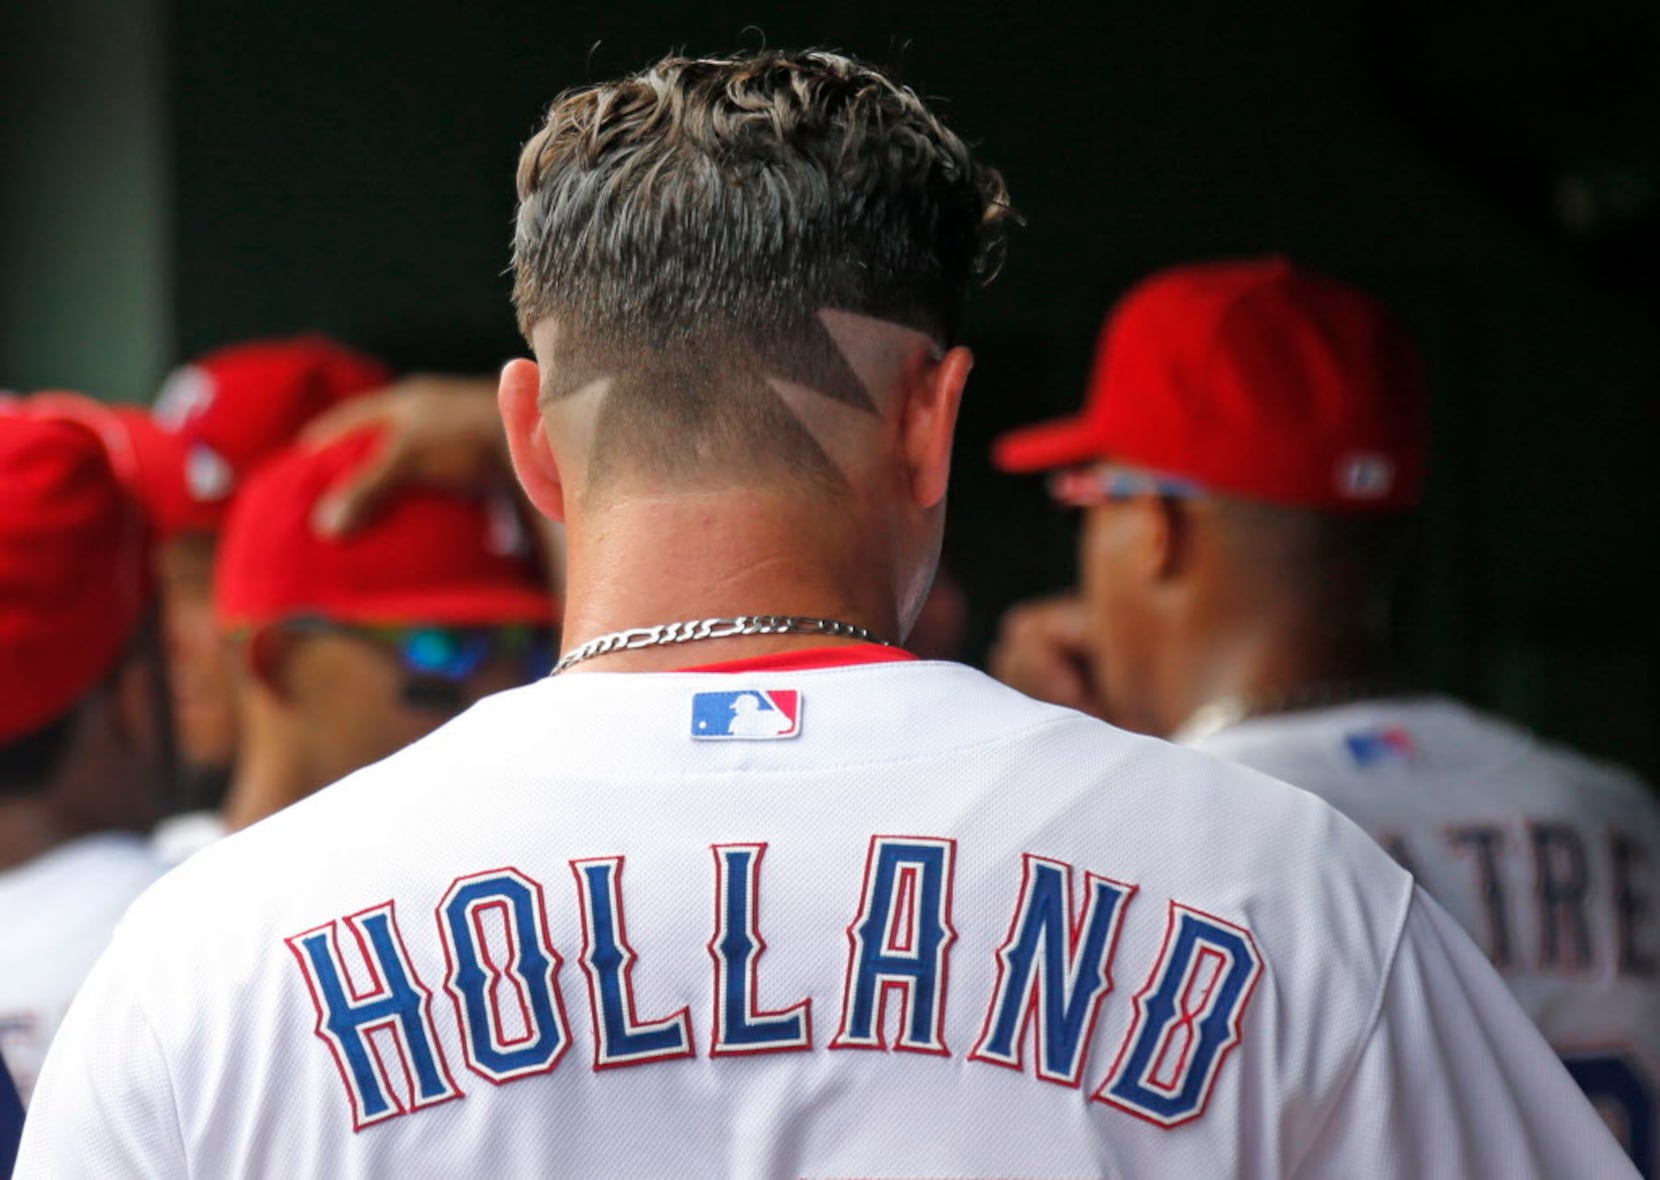 Charlie Sheen approves of Rangers pitcher Derek Holland's “Major